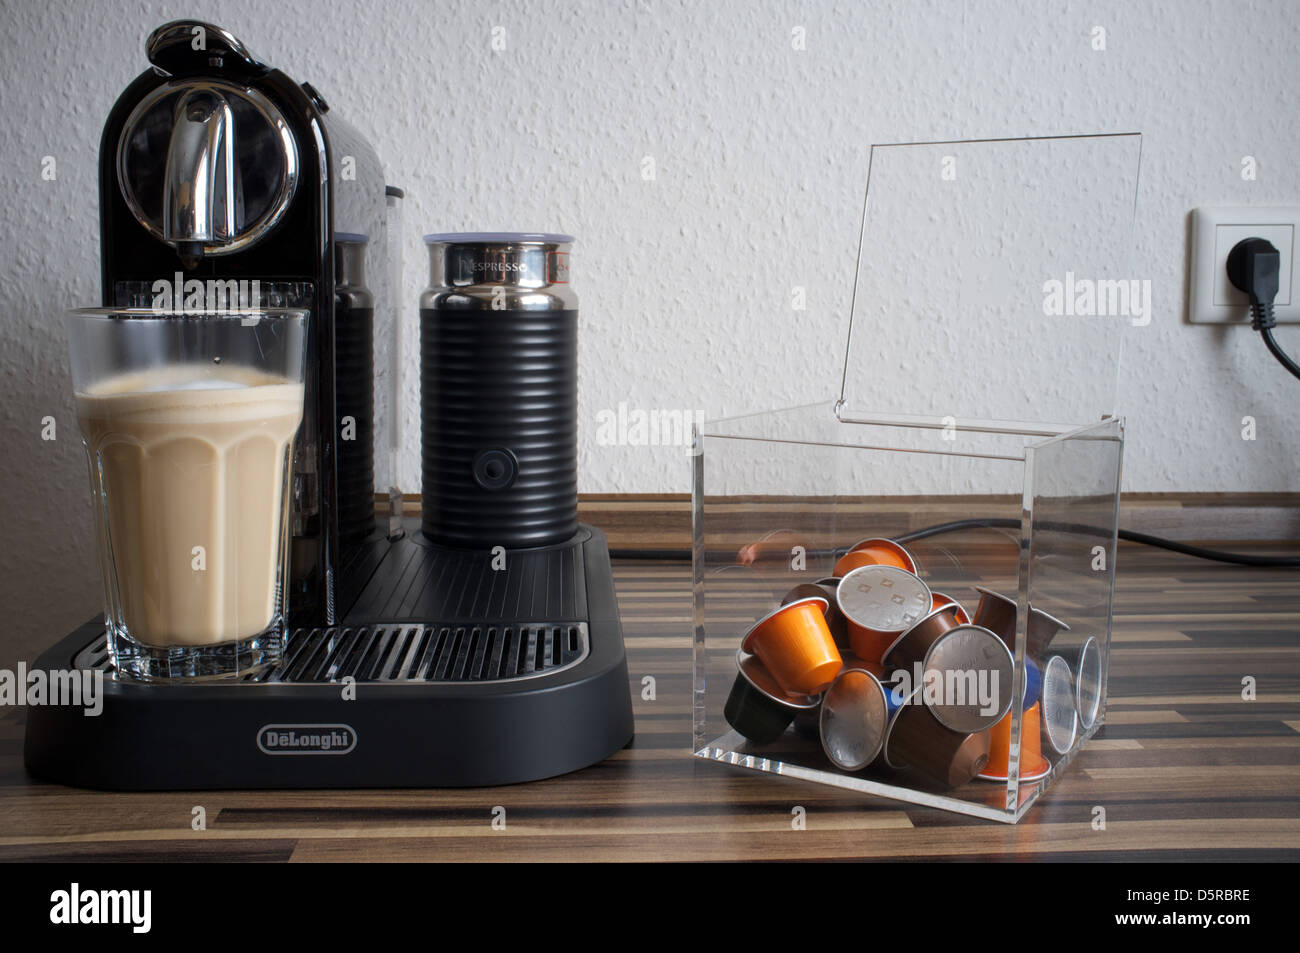 Nespresso DeLonghi coffee machine Stock Photo - Alamy